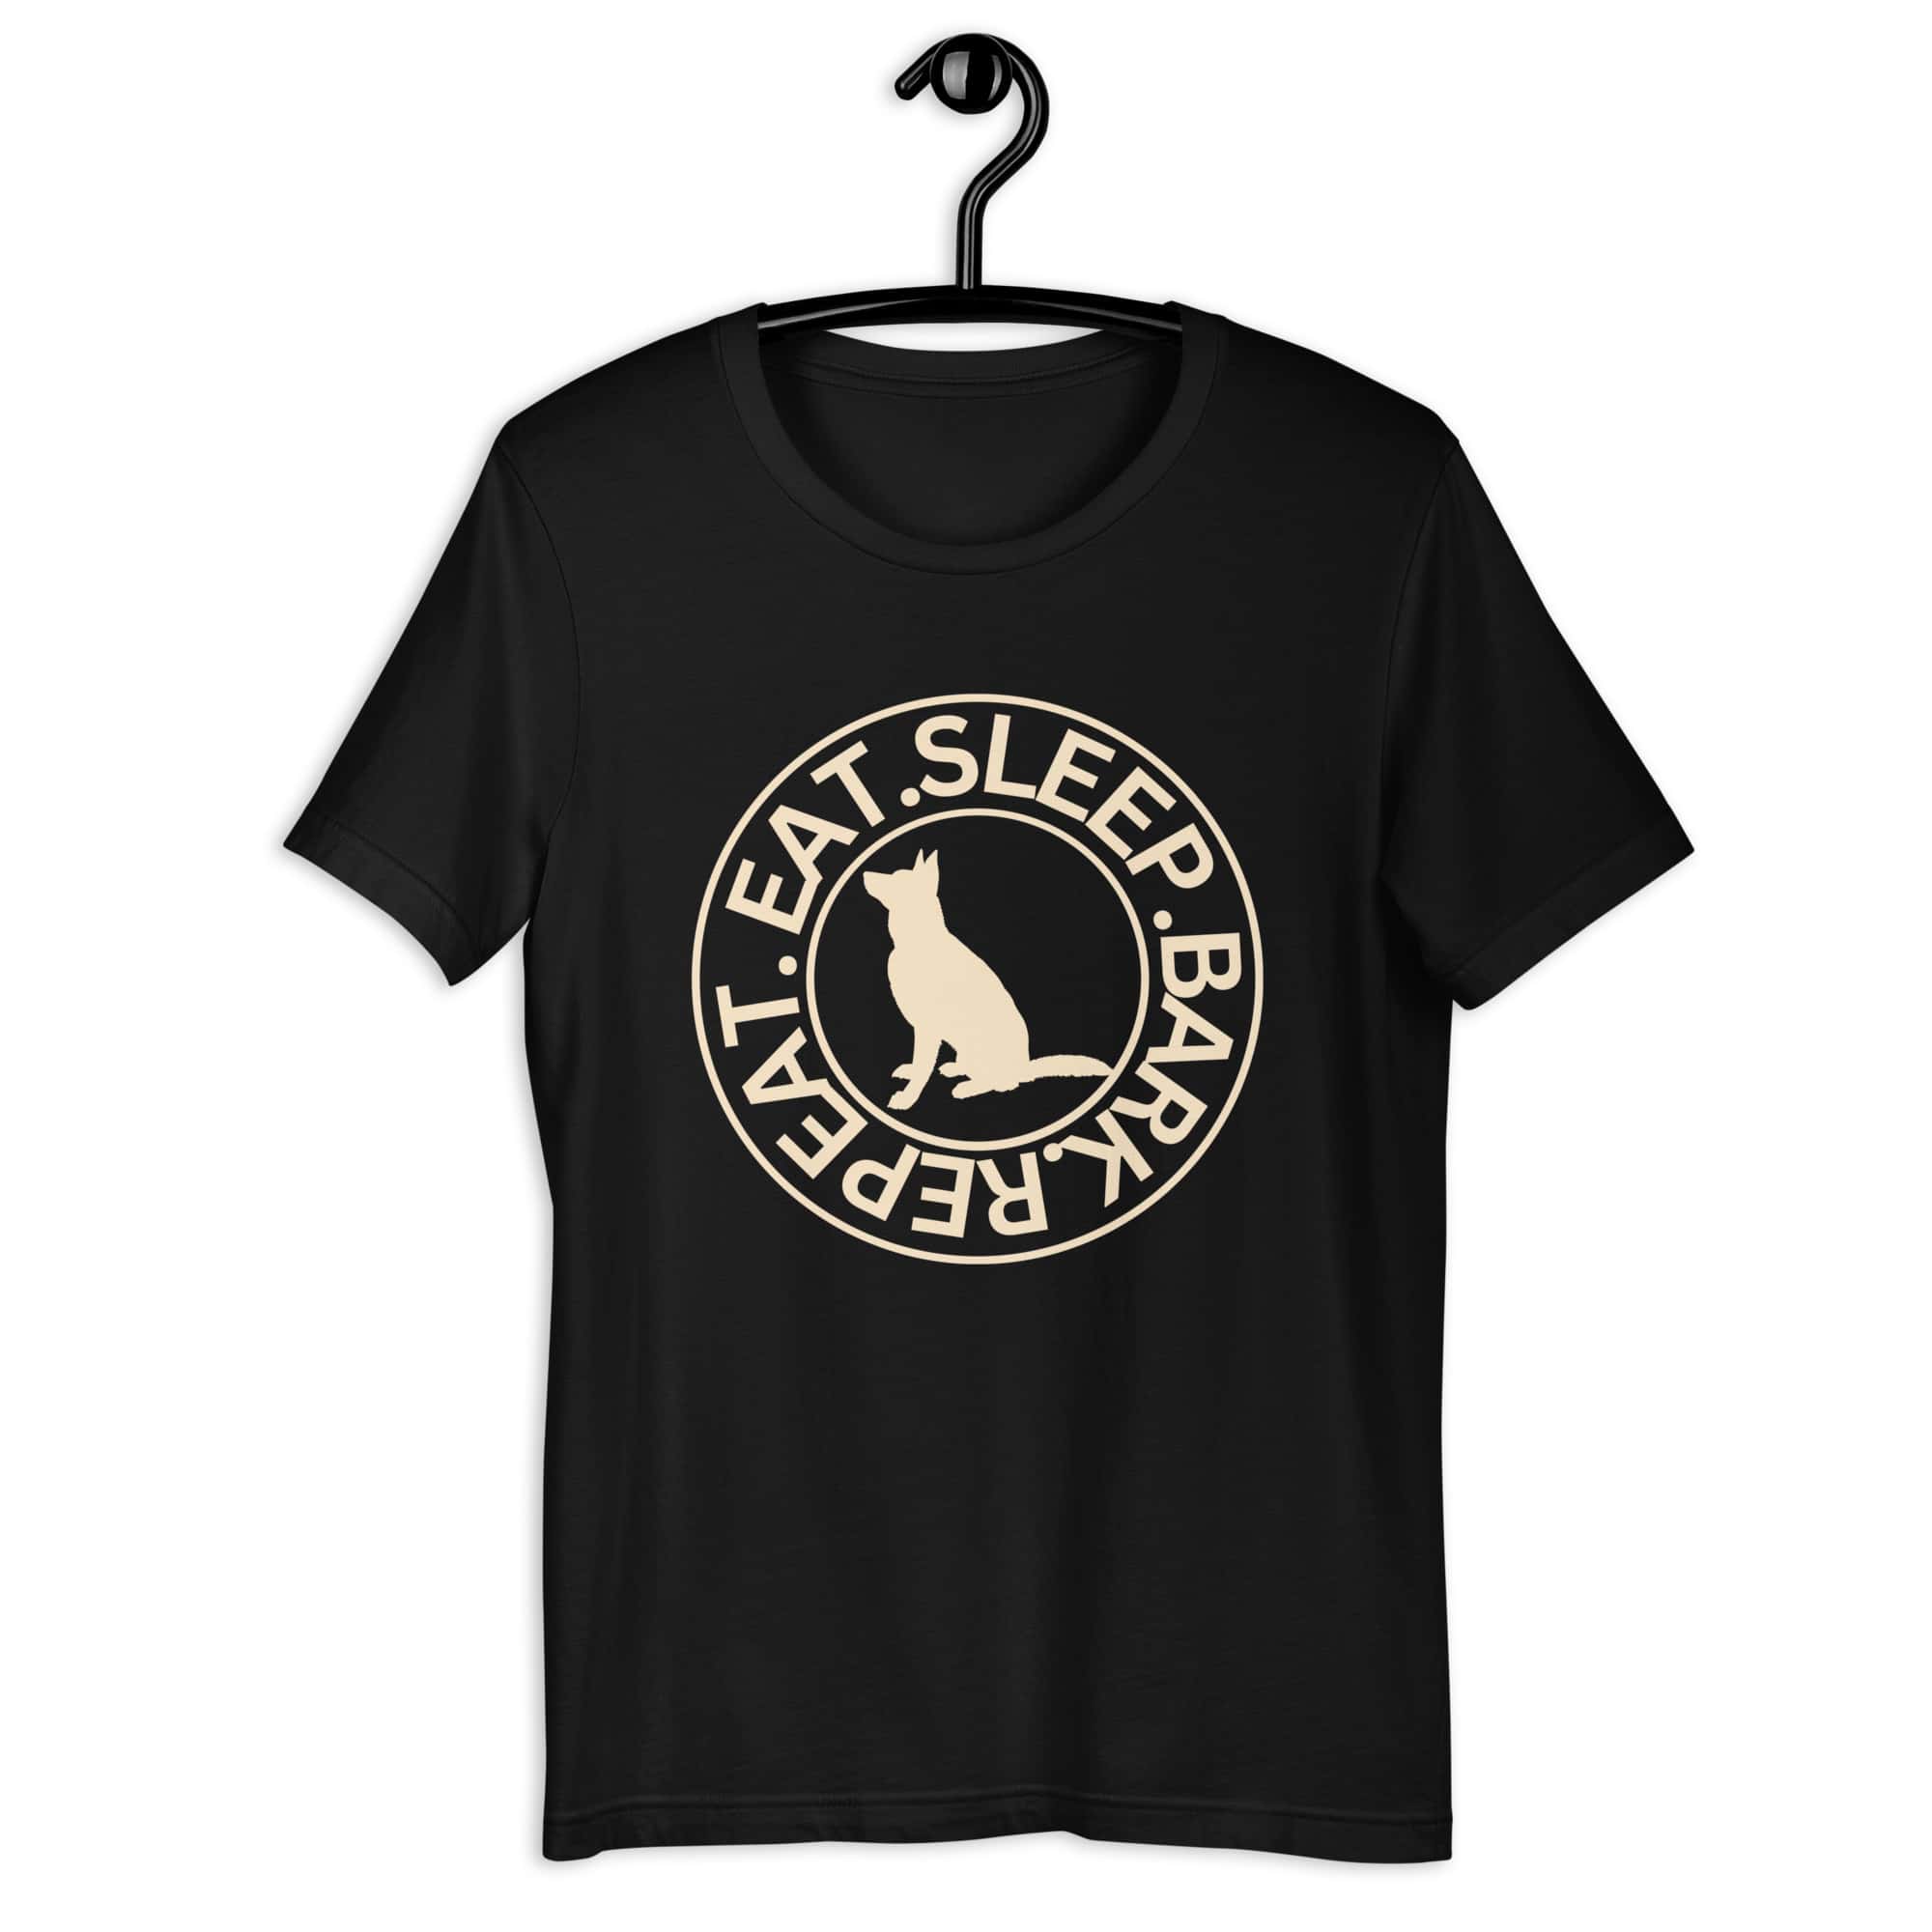 Eat Sleep Bark Repeat German Shepherd Unisex T-Shirt. Black